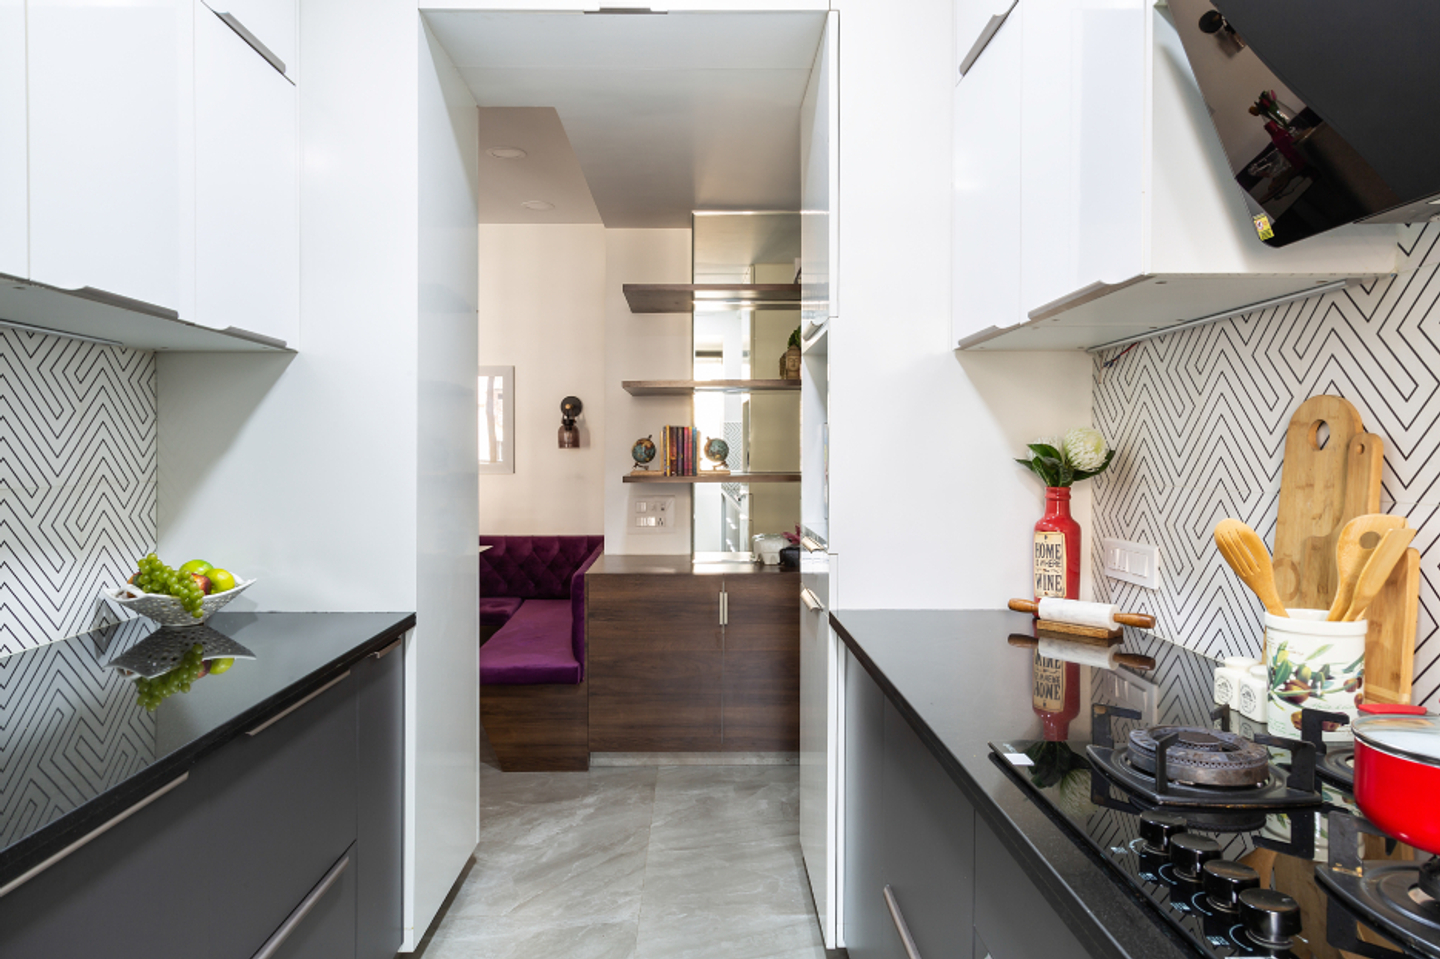 Modern Modular Parallel Kitchen Design With a Quartz Countertop